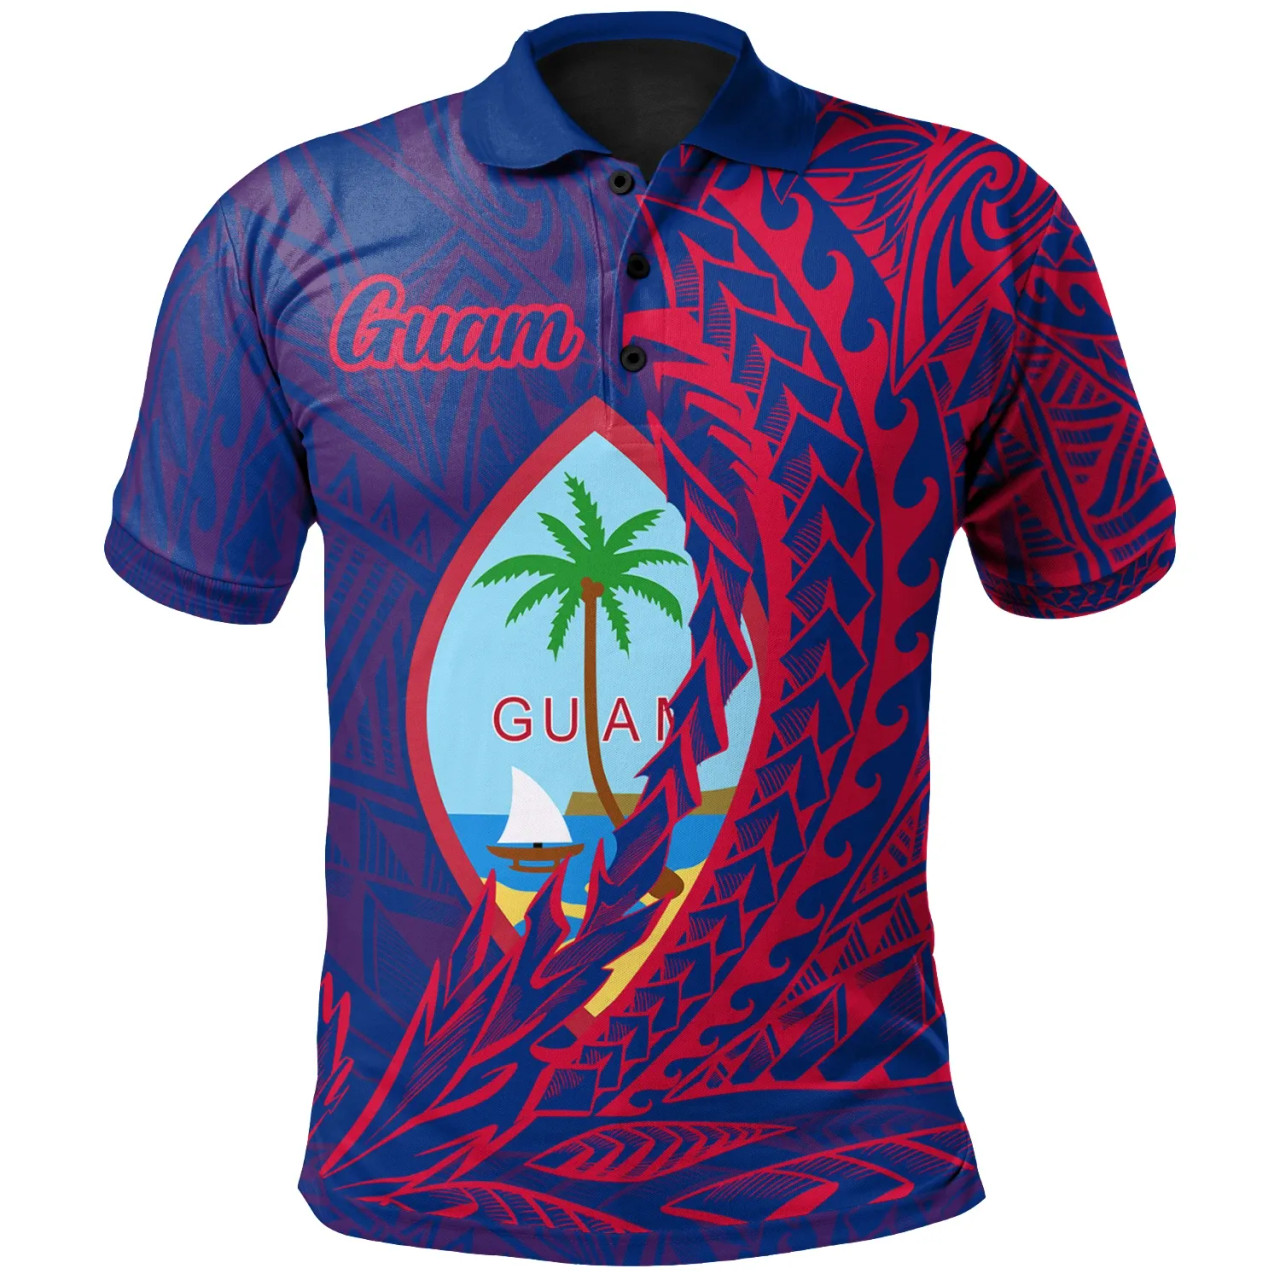 Guam Polo Shirt - Guam Wings Style 1